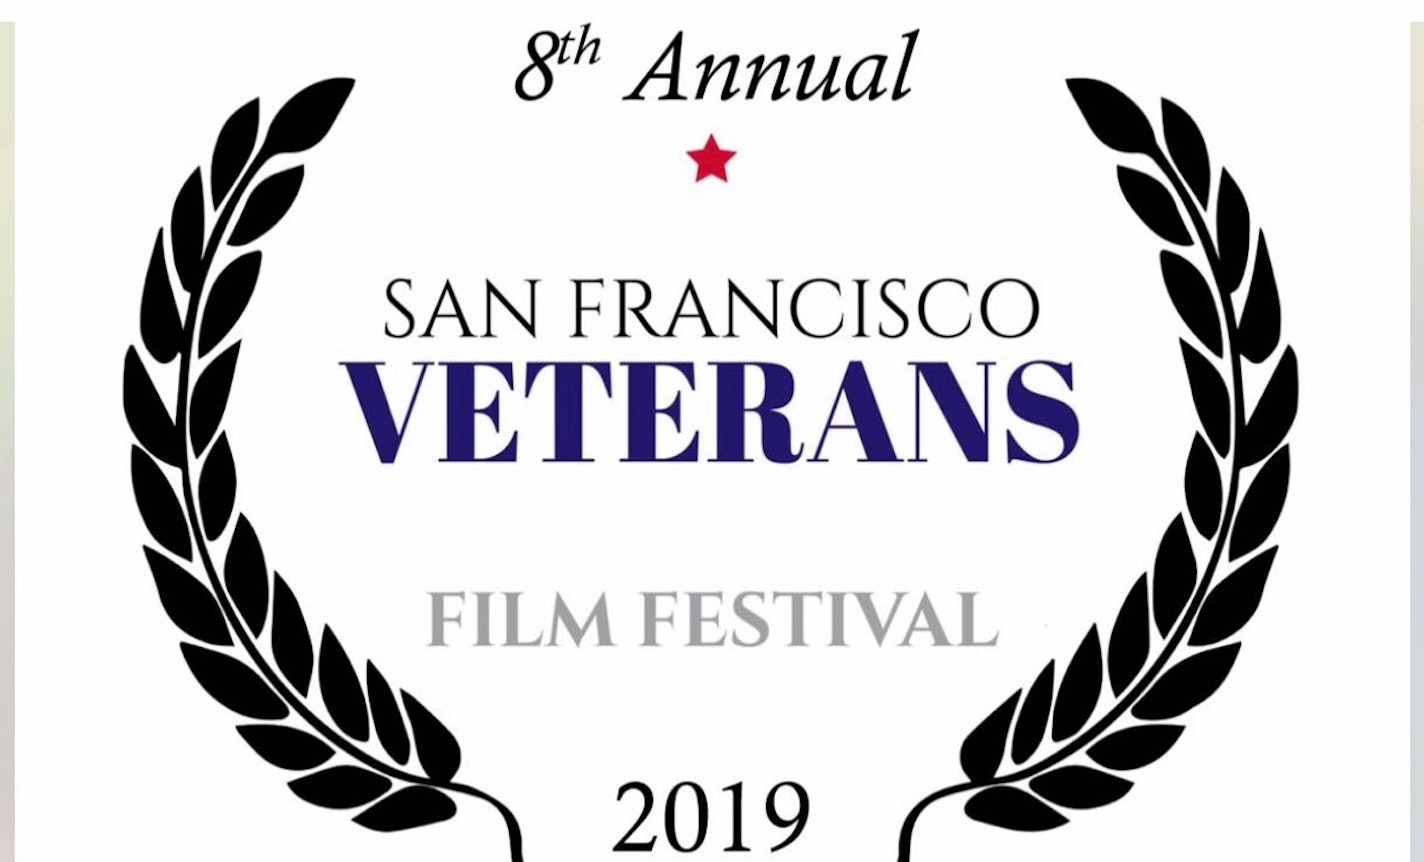 8th Annual San Francisco Veterans Film Festival